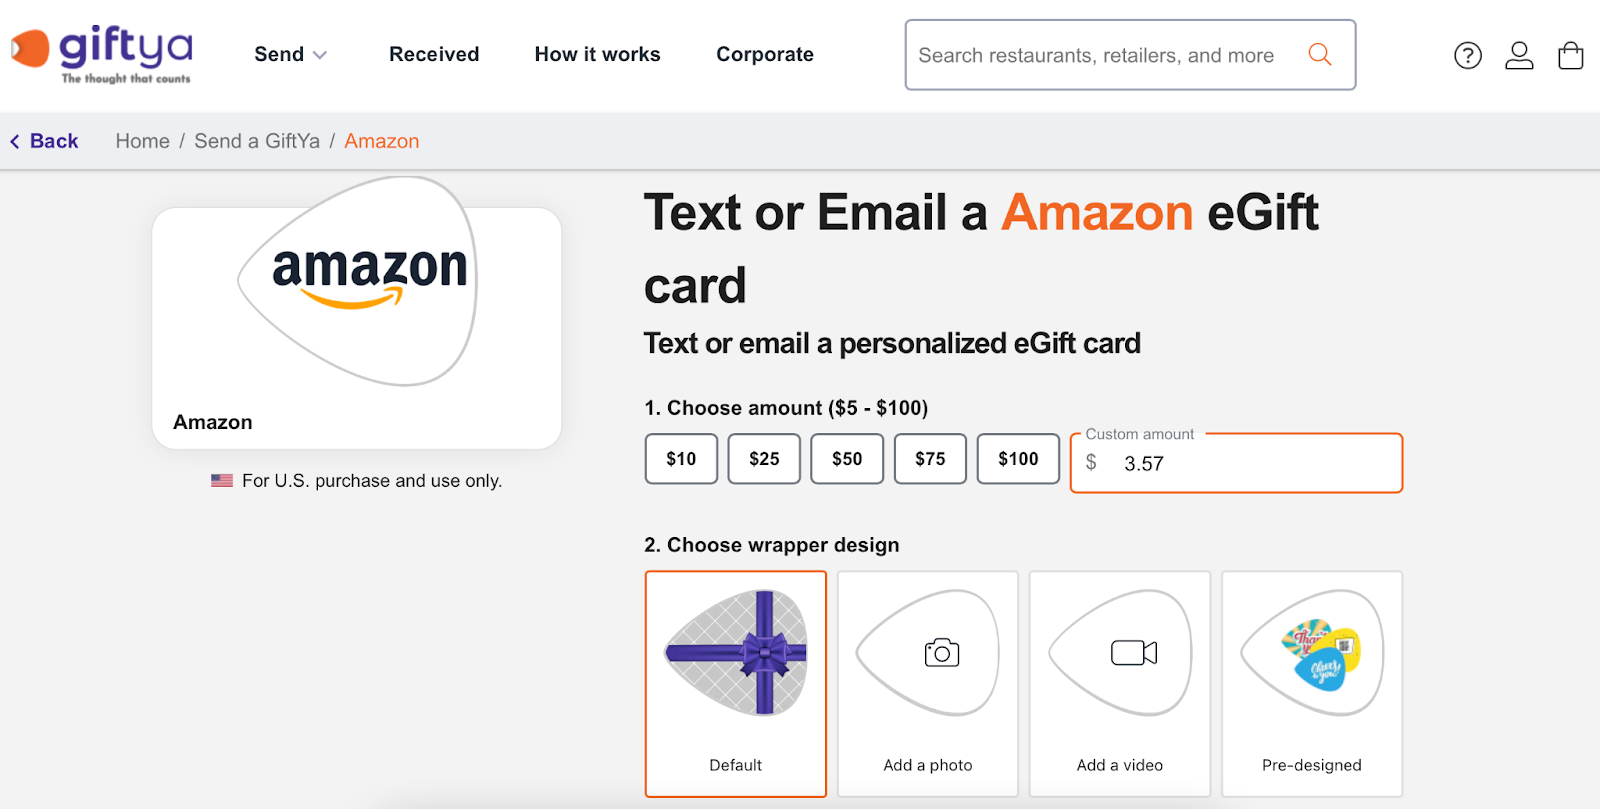 Amazon Live - Visa Gift Cards: Digital Code vs Physical Card